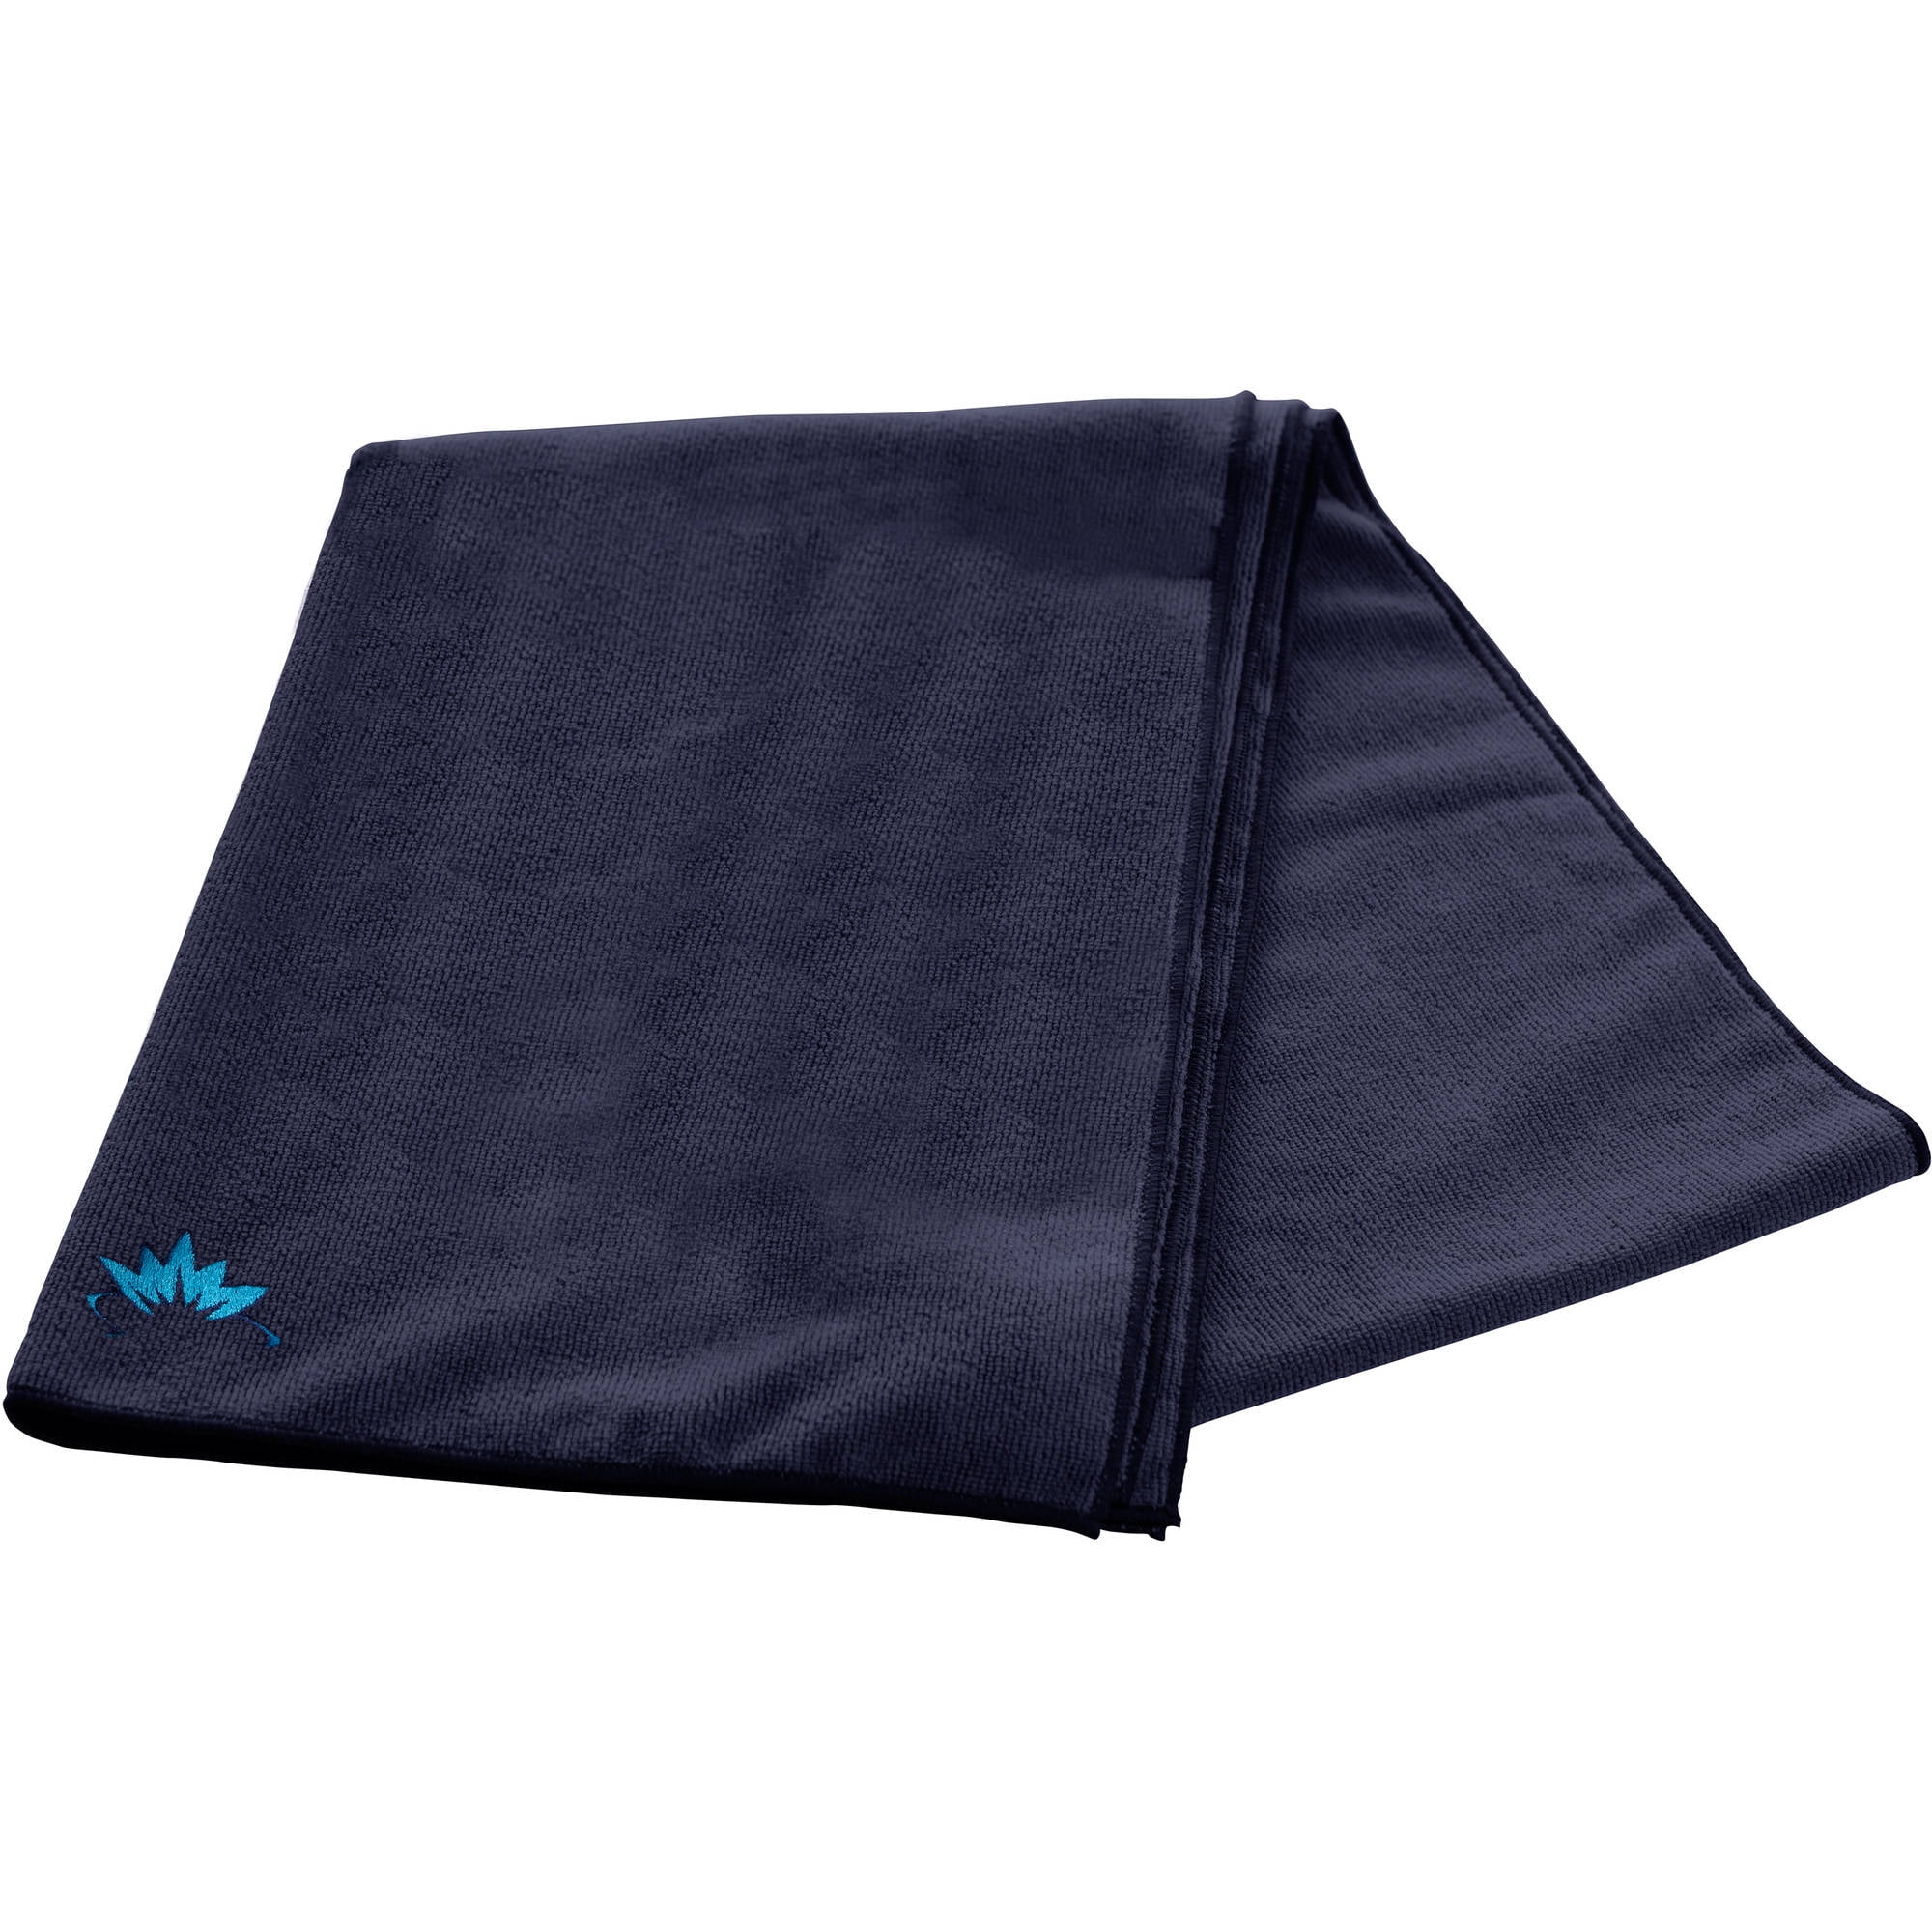 New Lotus LEVOIT Yoga Mat Towel Hot Yoga Non Slip Towel Set Of 3 Towels  (C48)